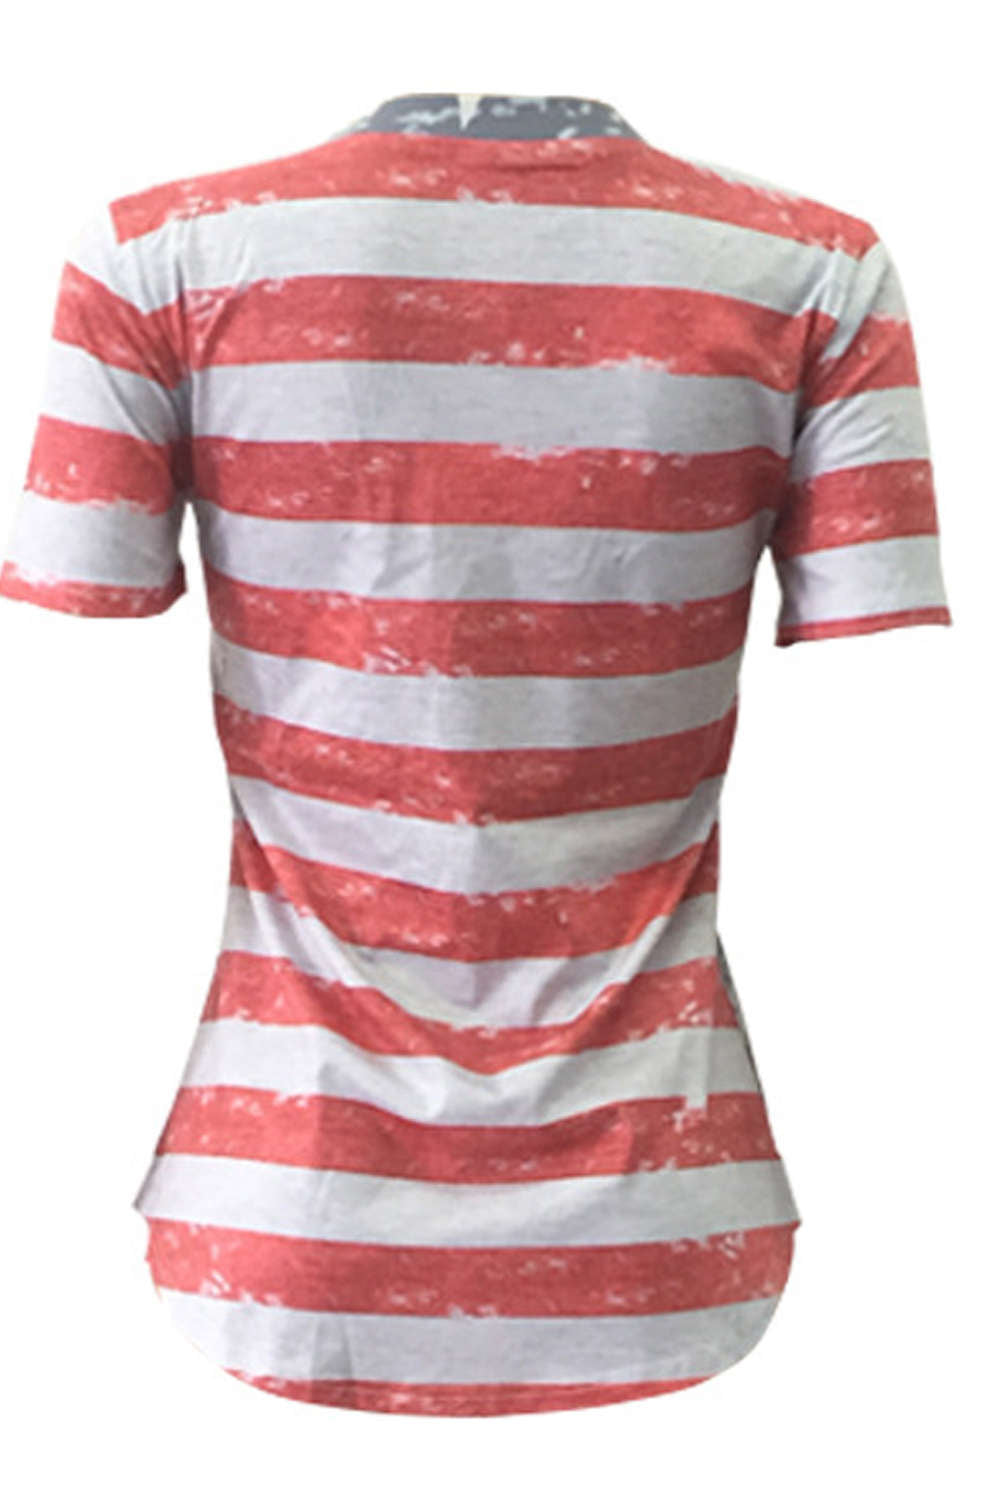 Iyasson American Flag Digital Printing T-shirt